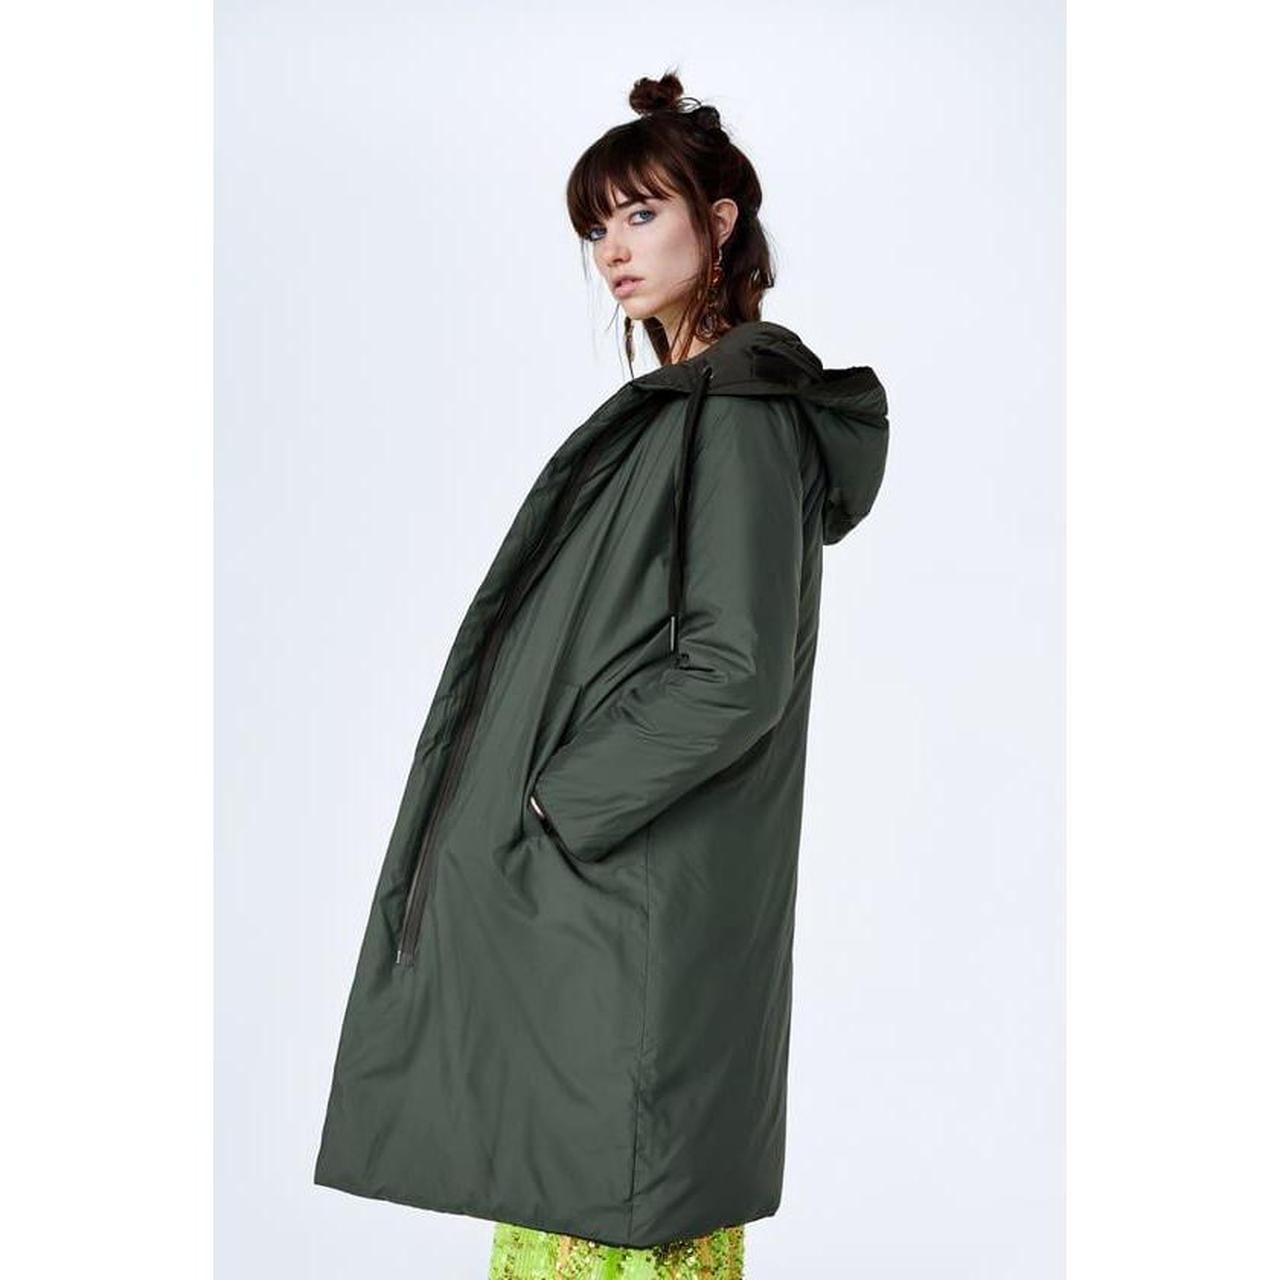 Product Image 1 - Zara reversible green/black down puffer